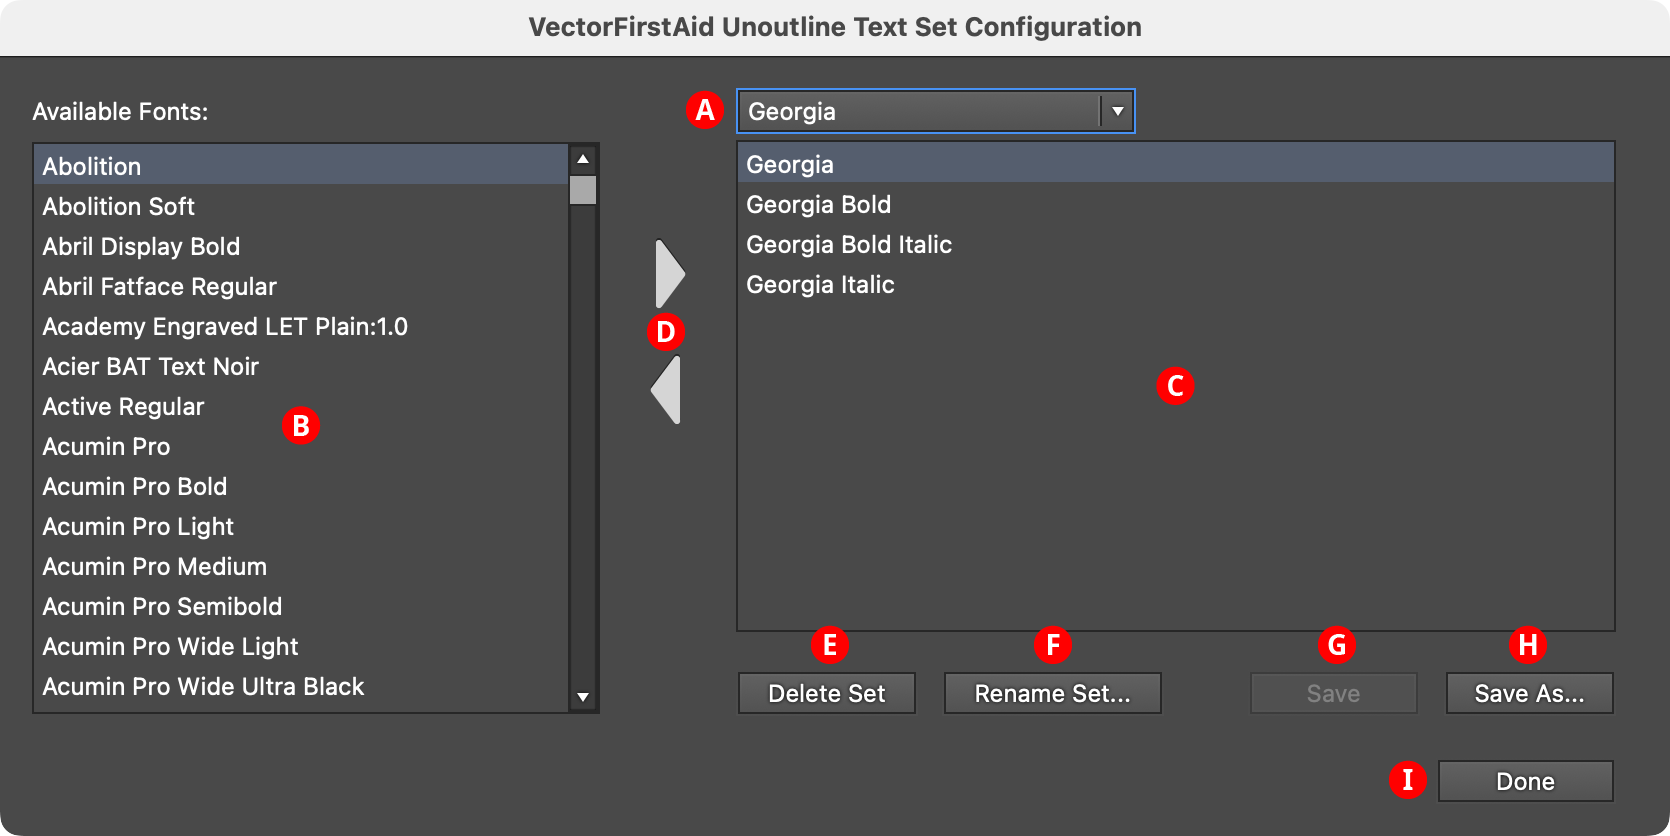 VectorFirstAid Unoutline Text Set Configuration Dialog